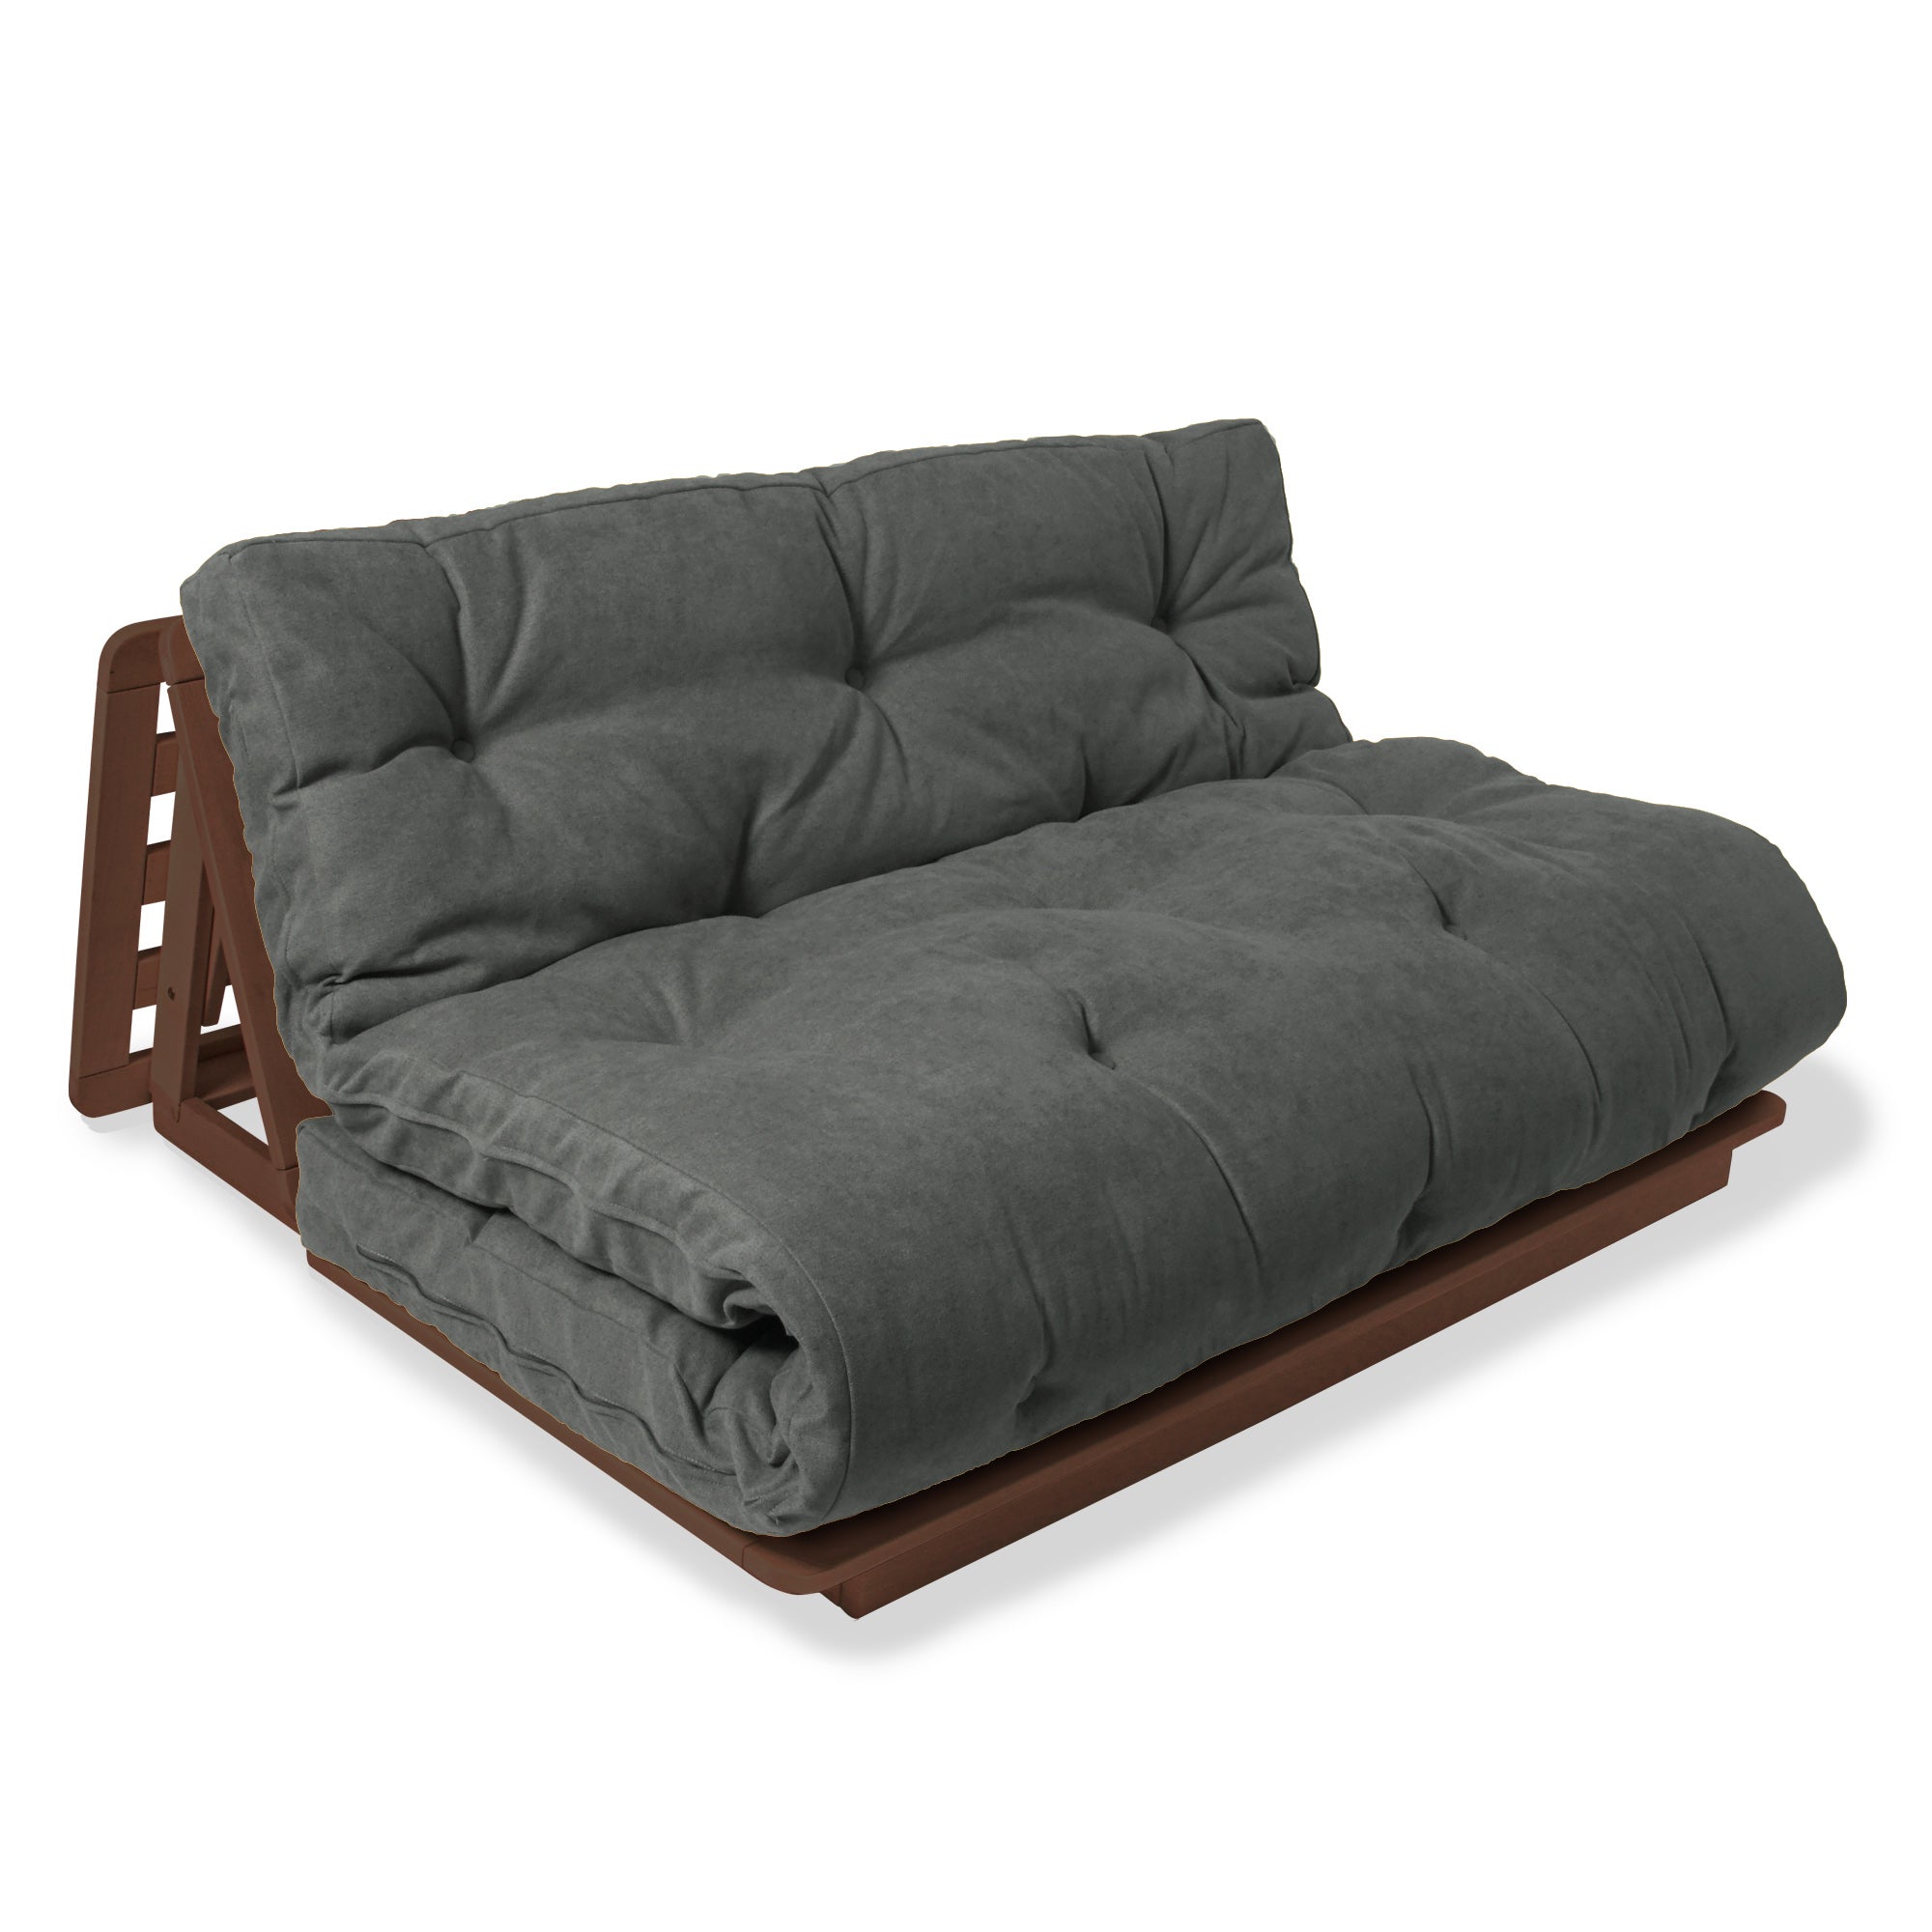 LAYTI-140 Futon Chair-walnut frame-gray fabric